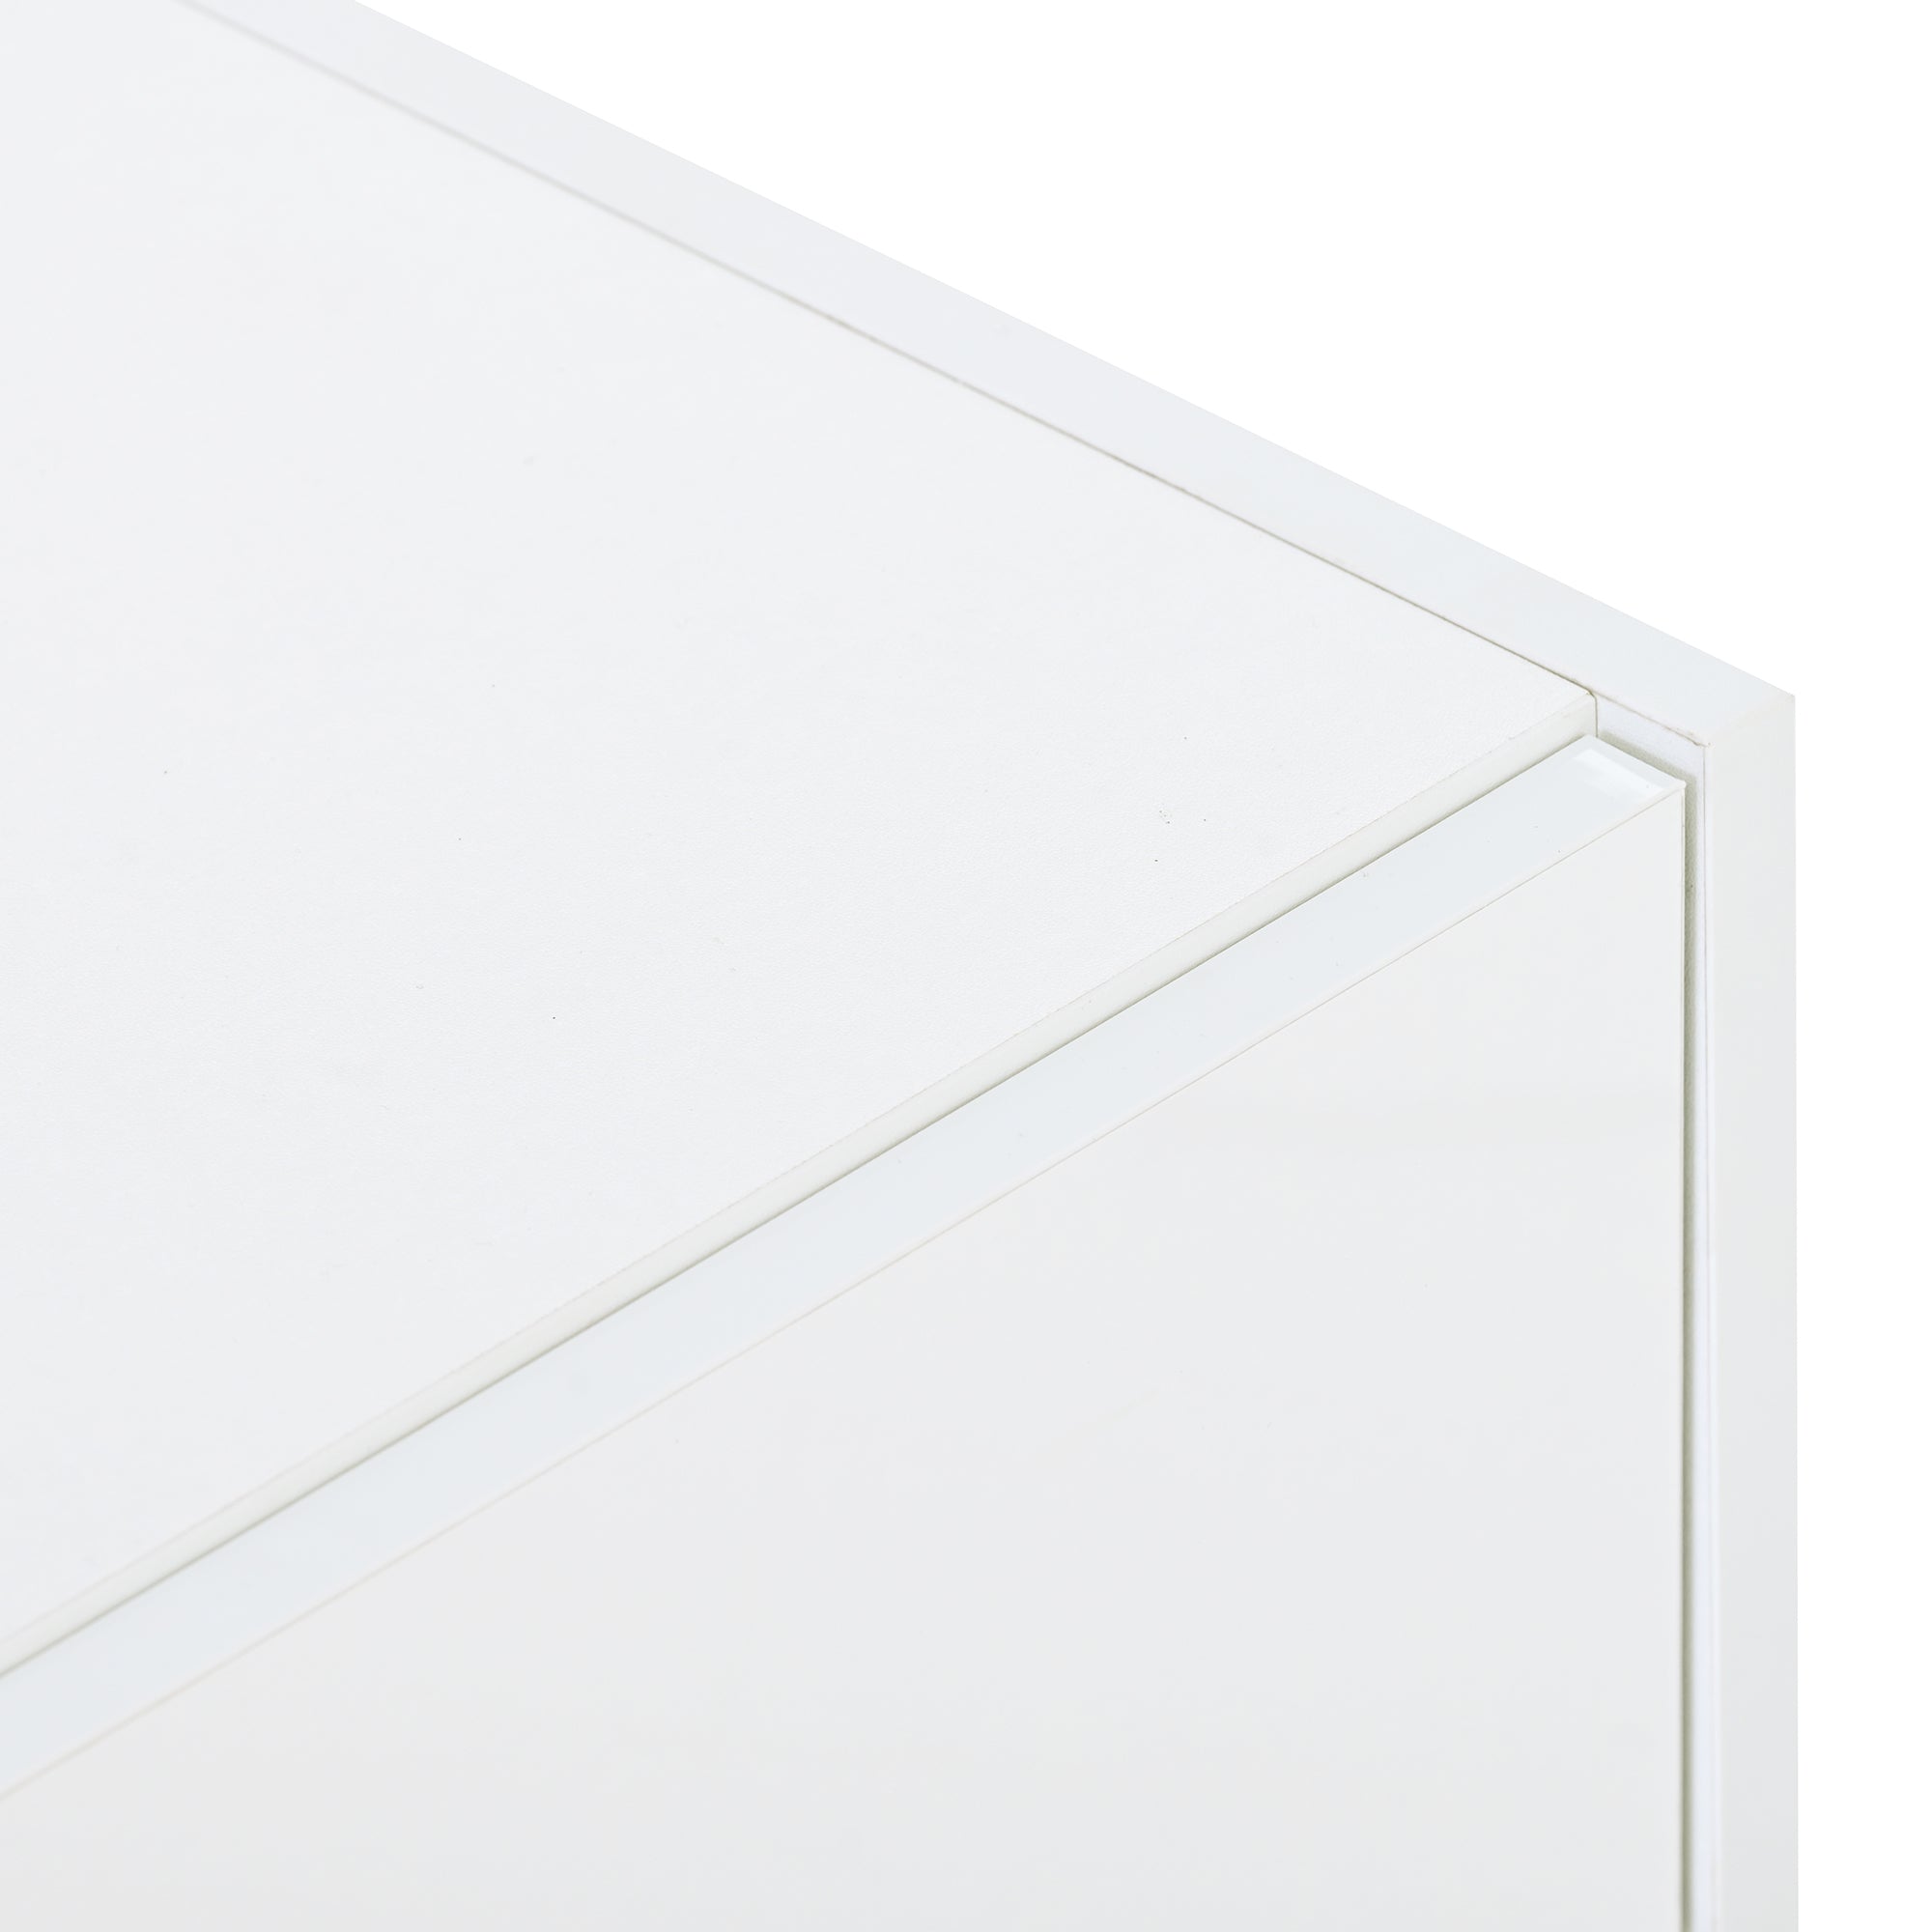 ON TREND White & Black Contemporary Rectangle Design white-particle board